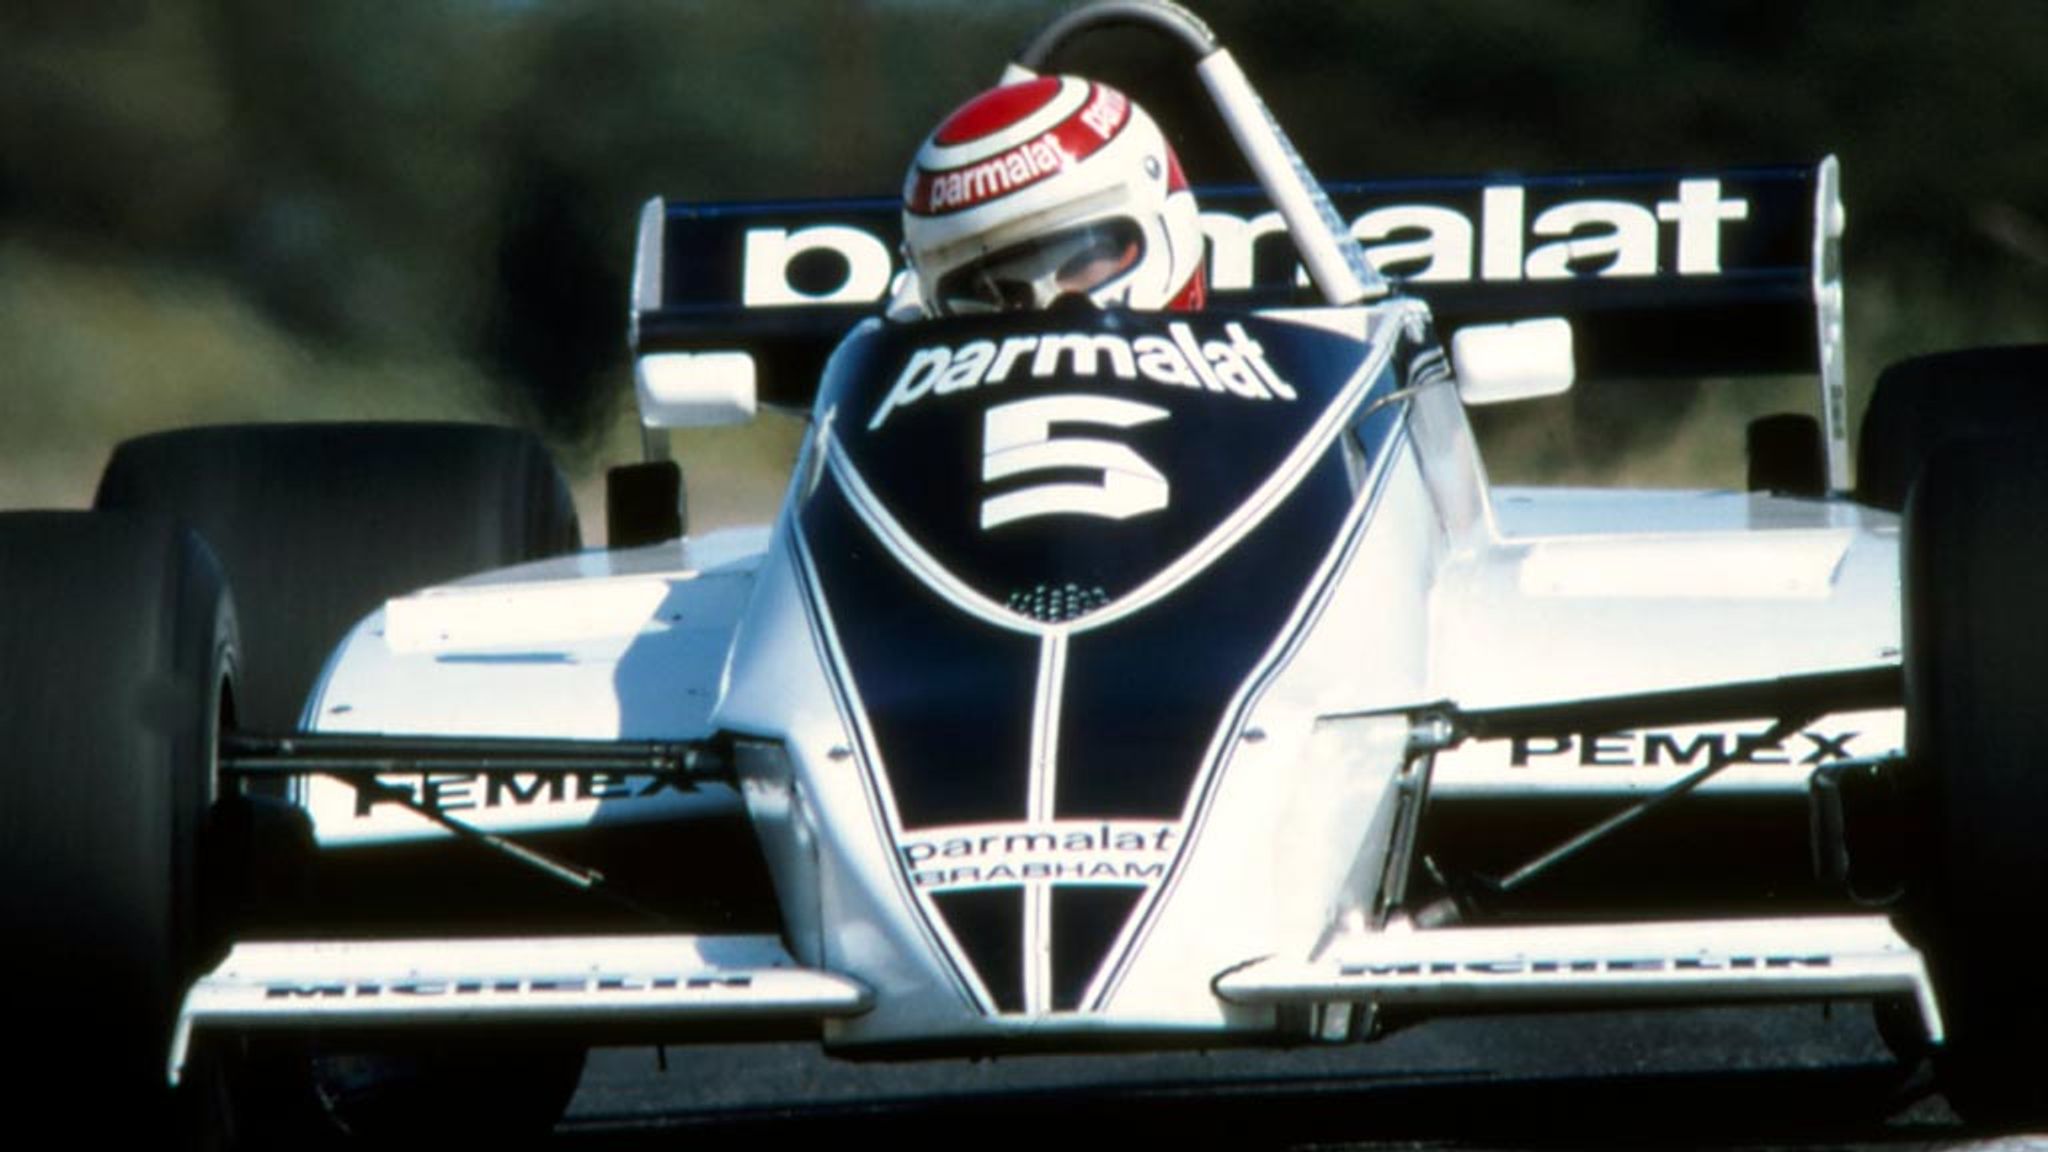 Brabham F1: Forgotten F1 Team 